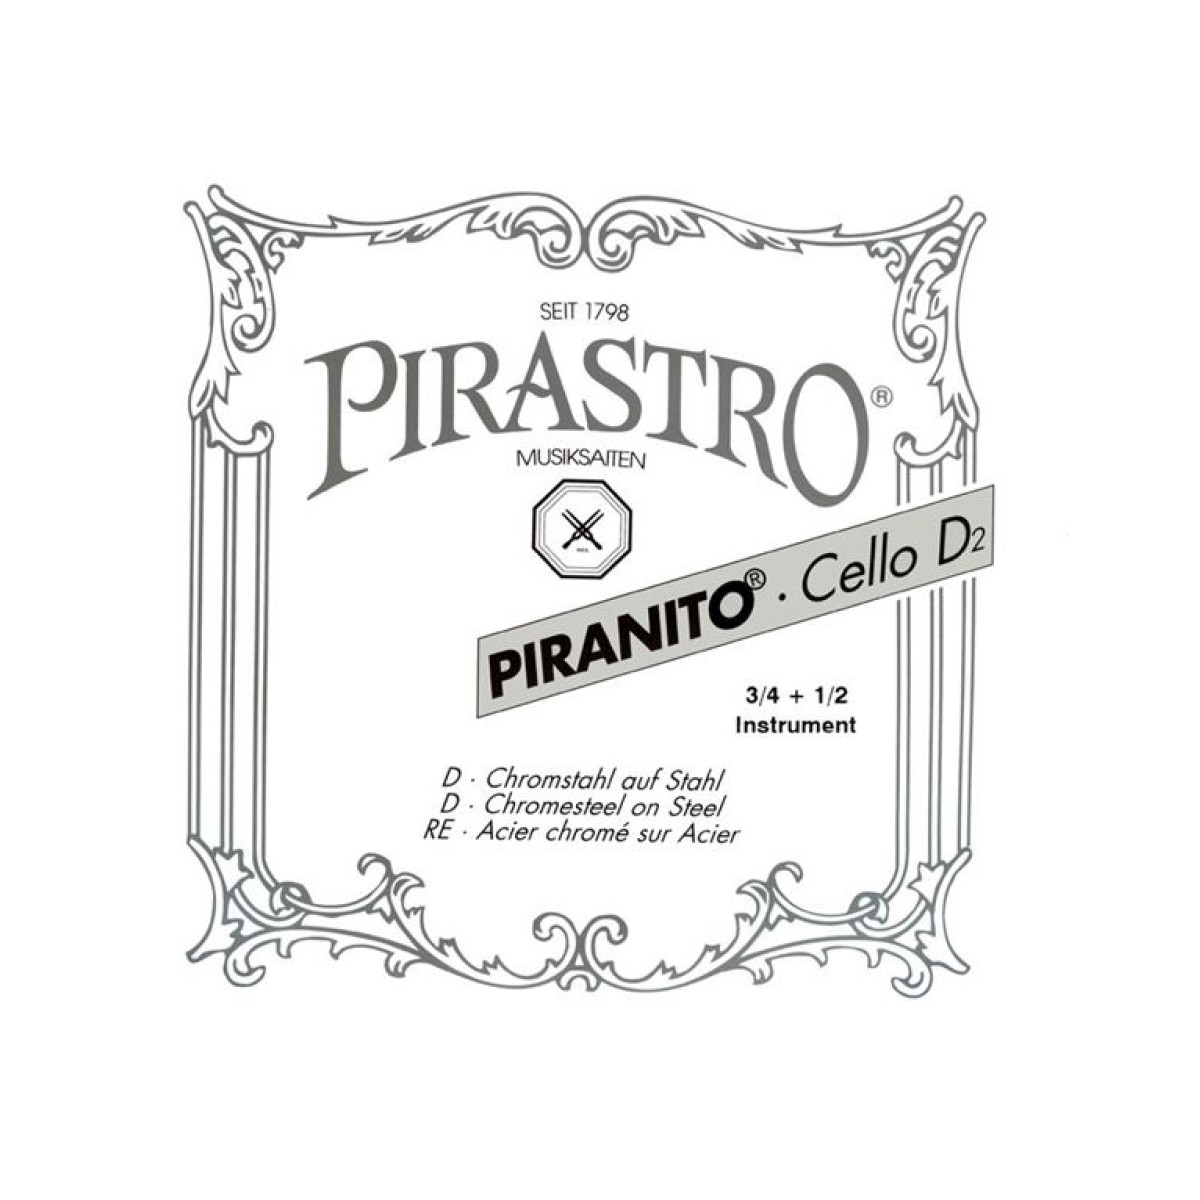 PIRASTRO Piranito Medium 635240 D Ball Steel Xορδή Tσέλου Pε 3/4 + 1/2